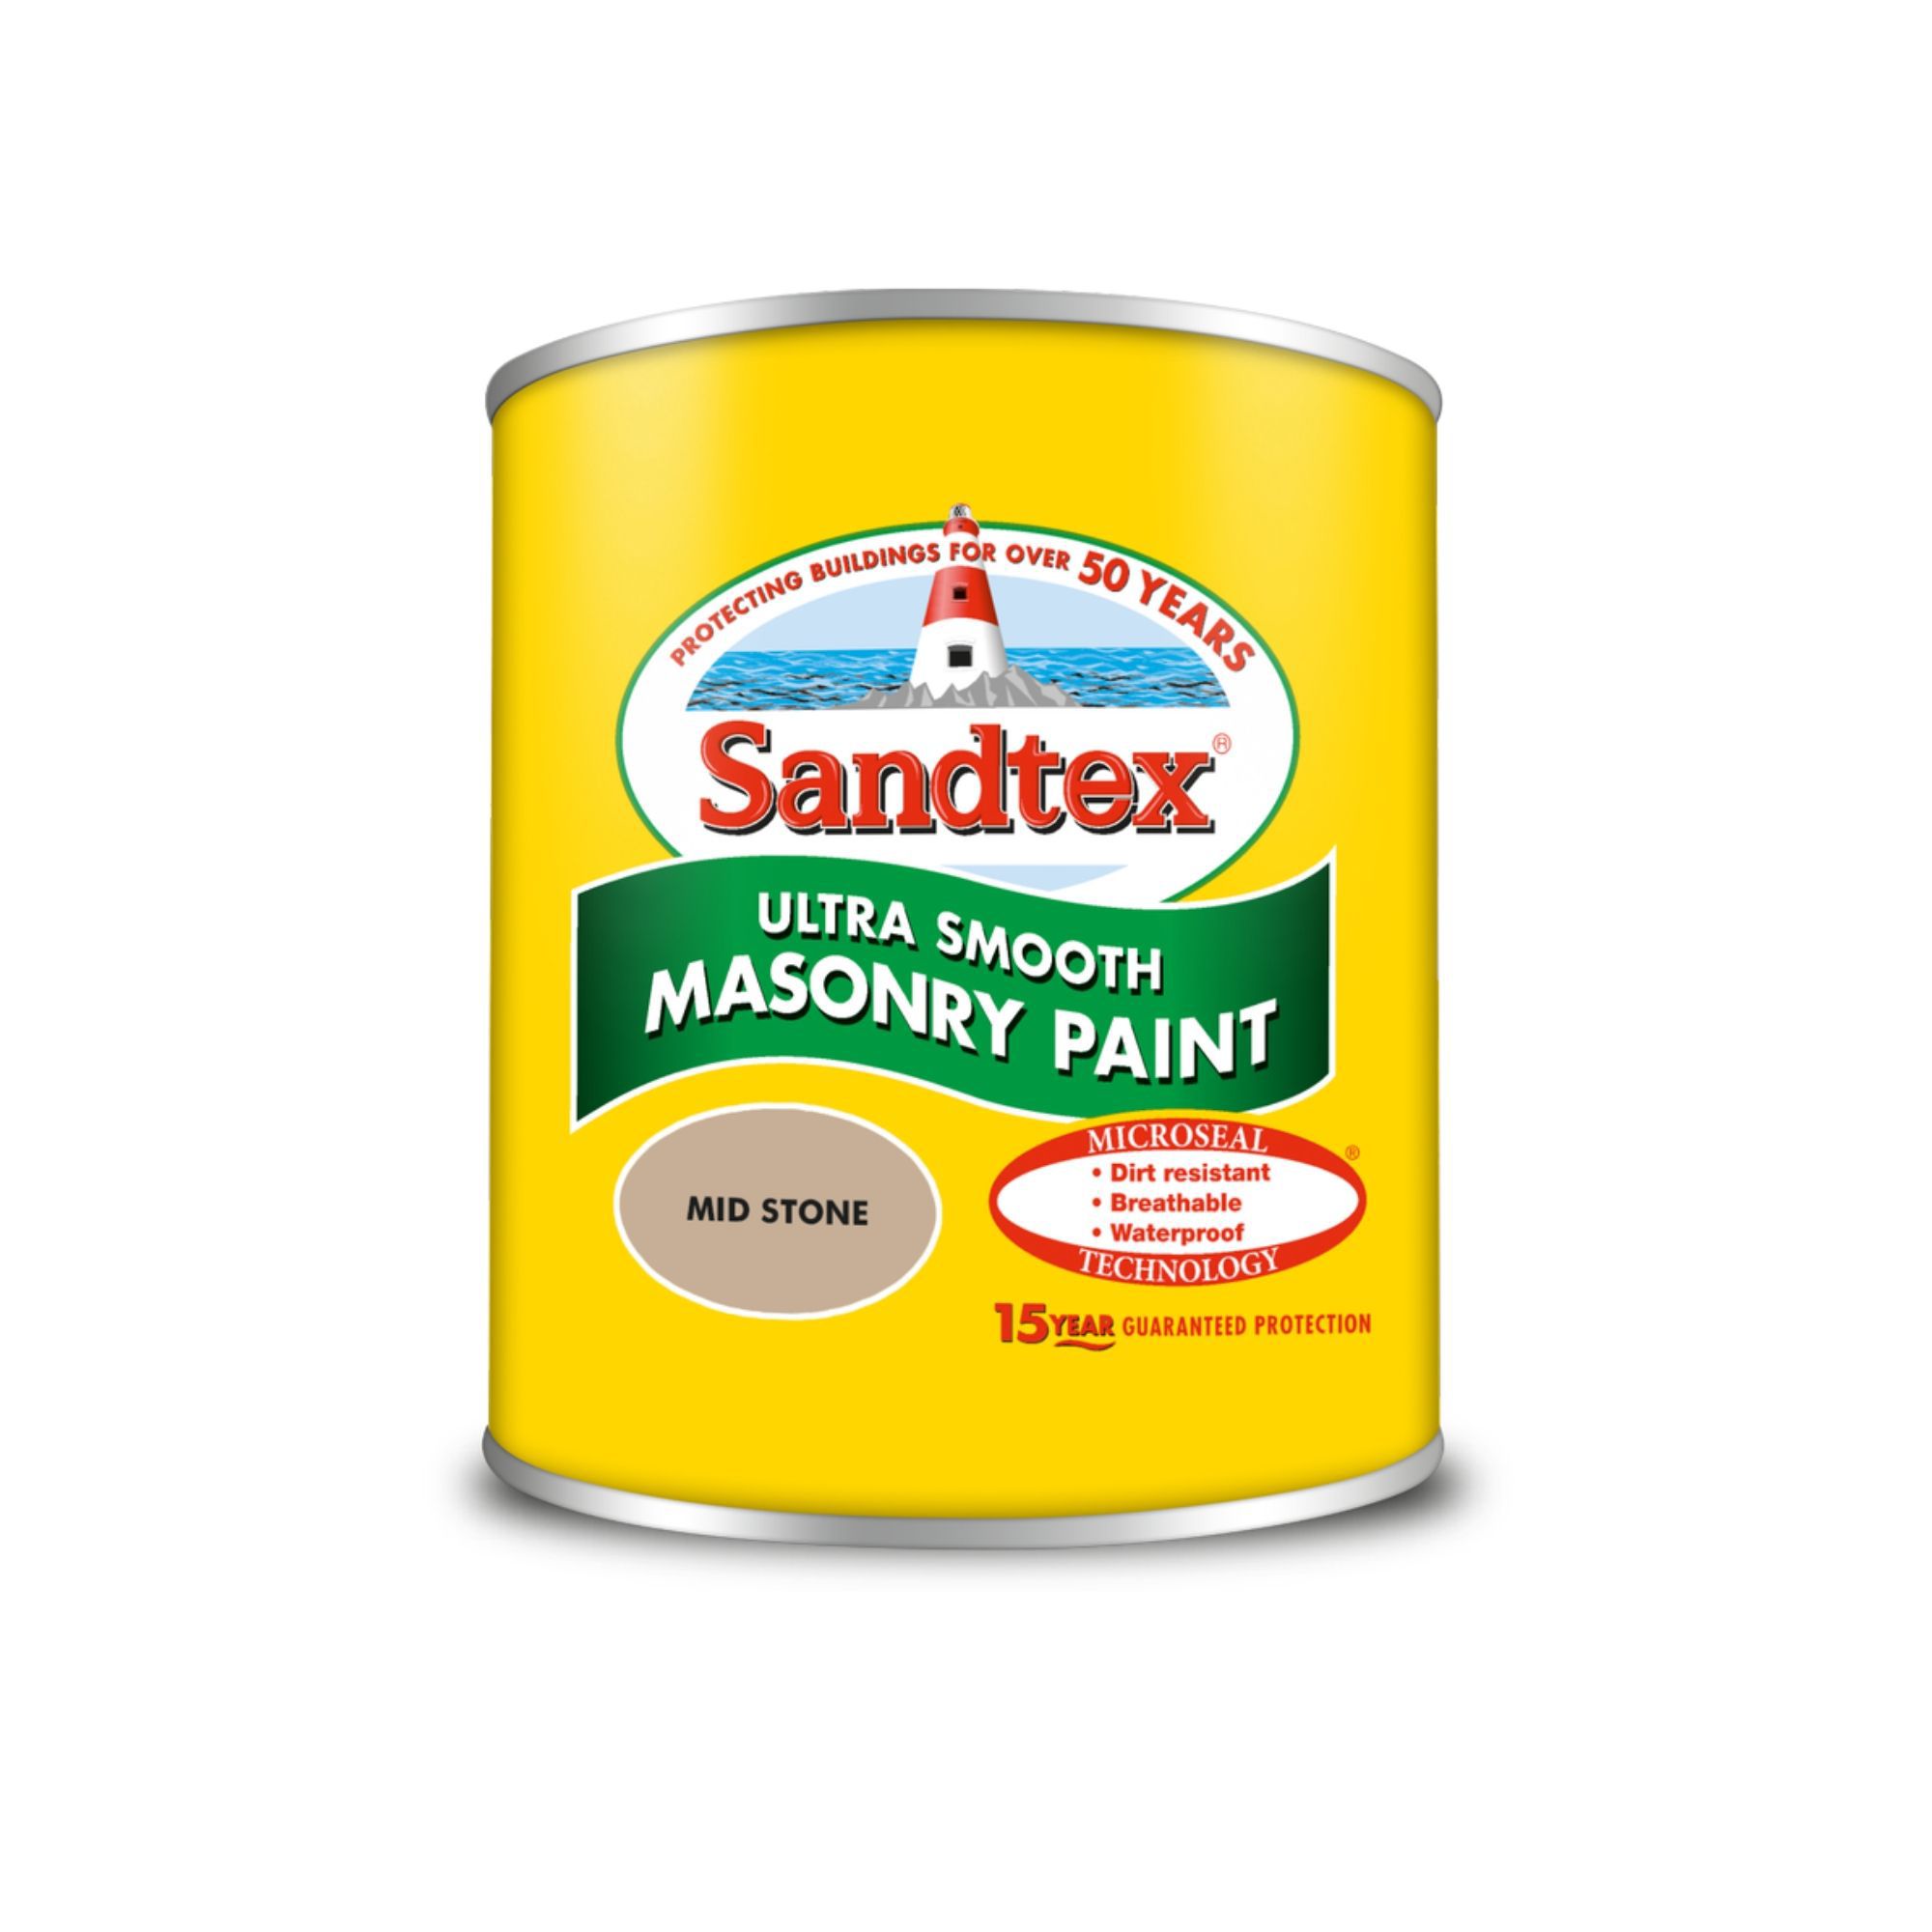 Sandtex Mid stone Masonry paint, 150ml Tester pot